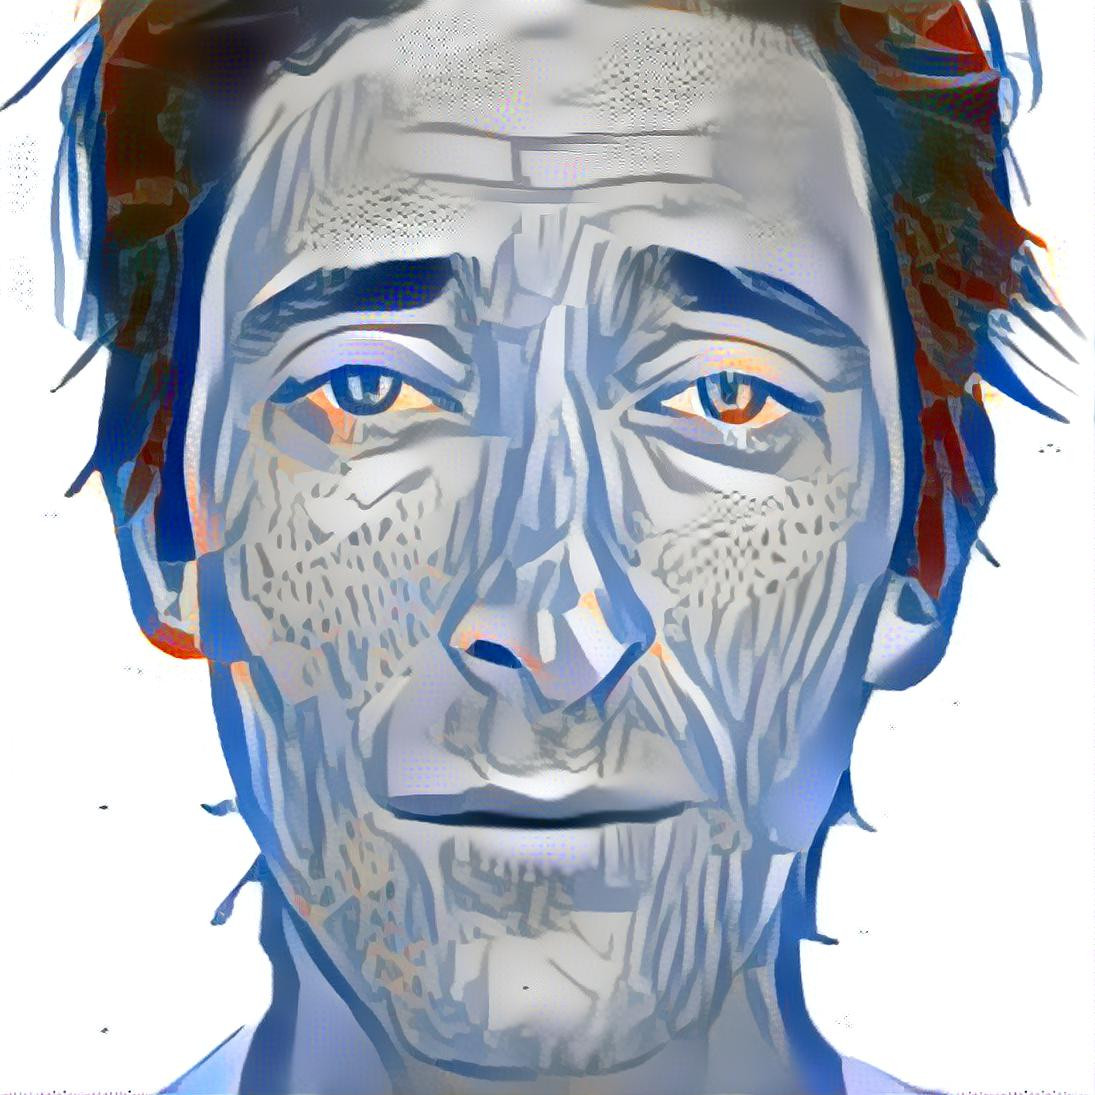 Portrait of Adrien Brody